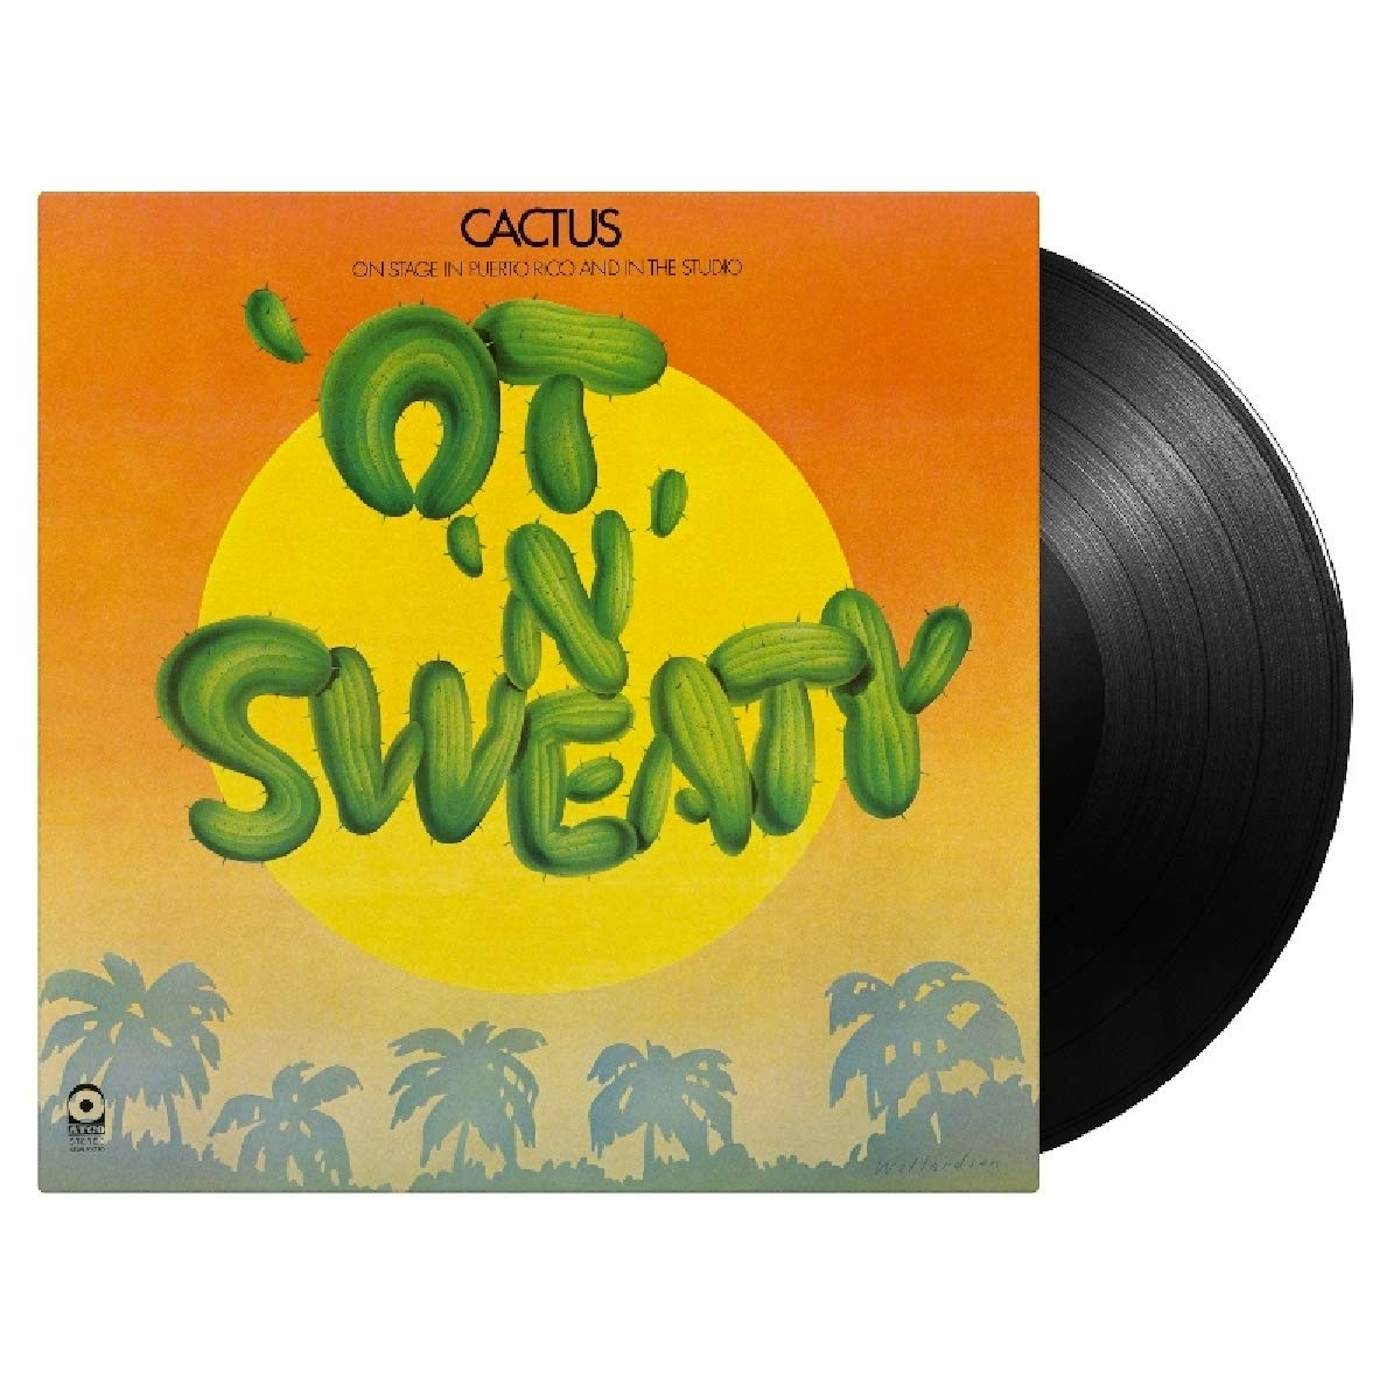 Cactus OT N SWEATY (180G/GATEFOLD SLEEVE) Vinyl Record